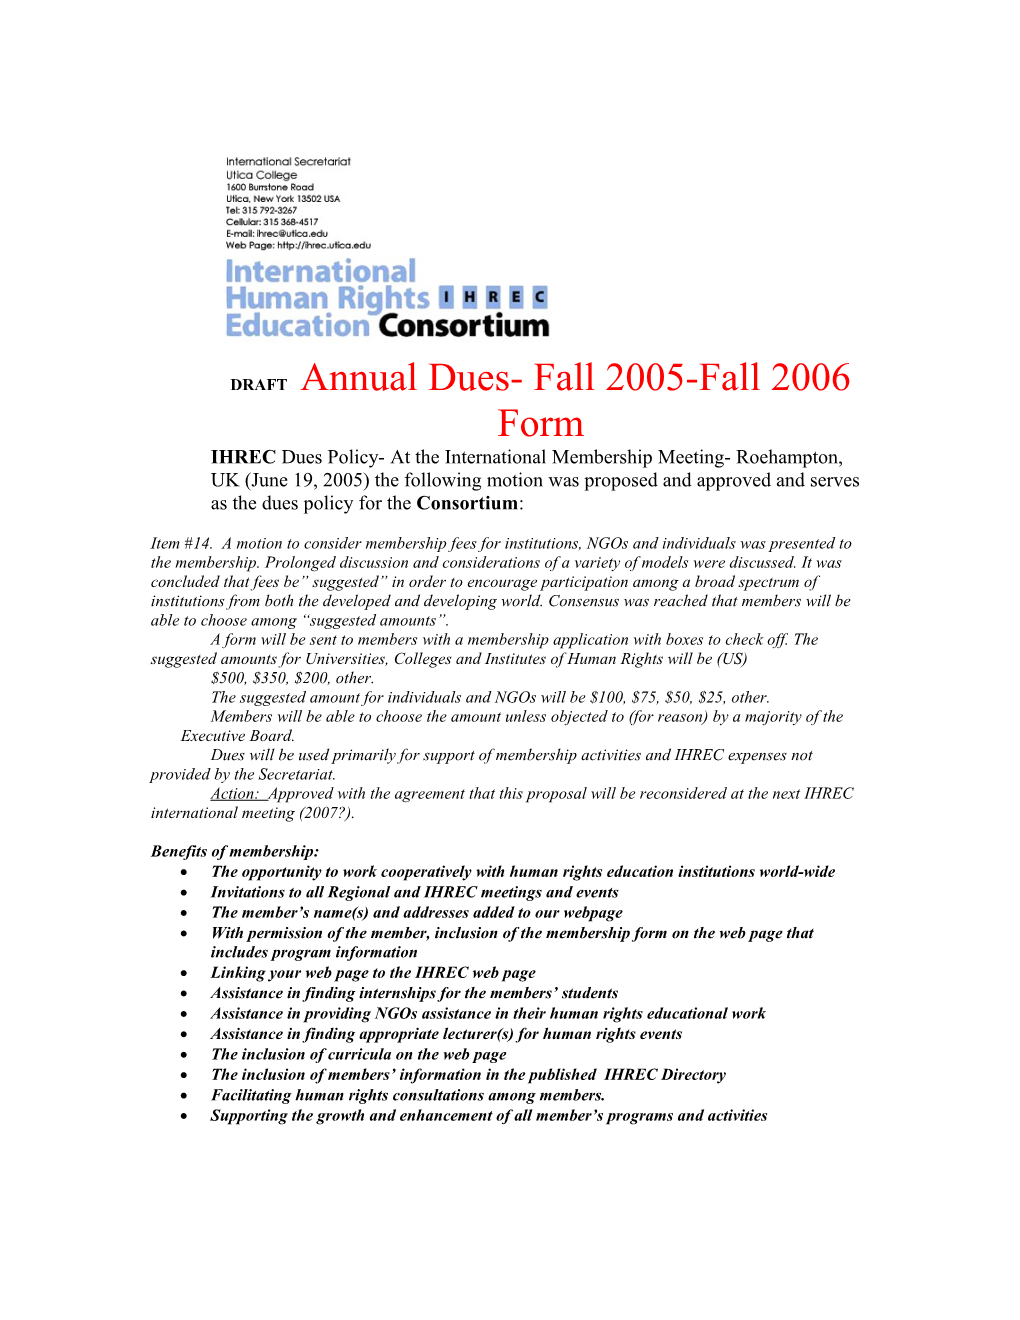 DRAFT Annual Dues- Fall 2005-Fall 2006